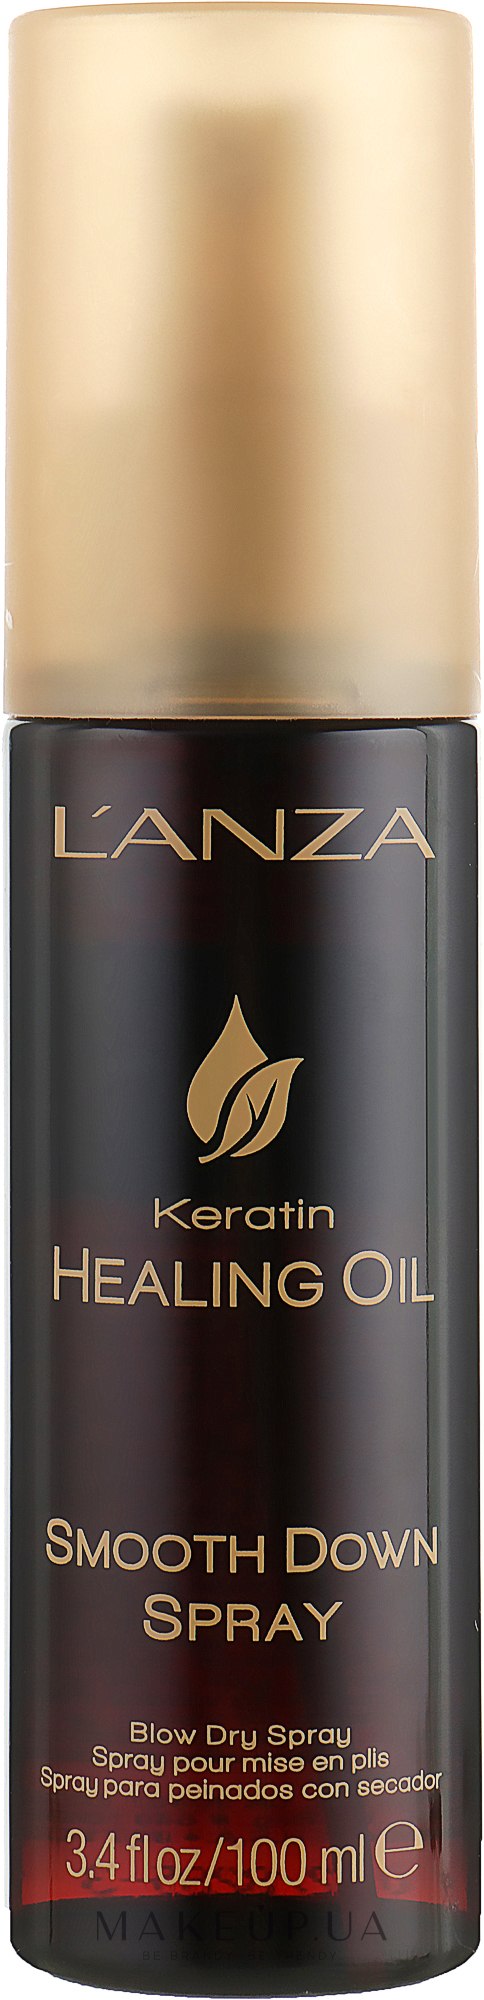 Спрей для гладкой укладки - L'anza Keratin Healing Oil Smooth Down Spray — фото 100ml